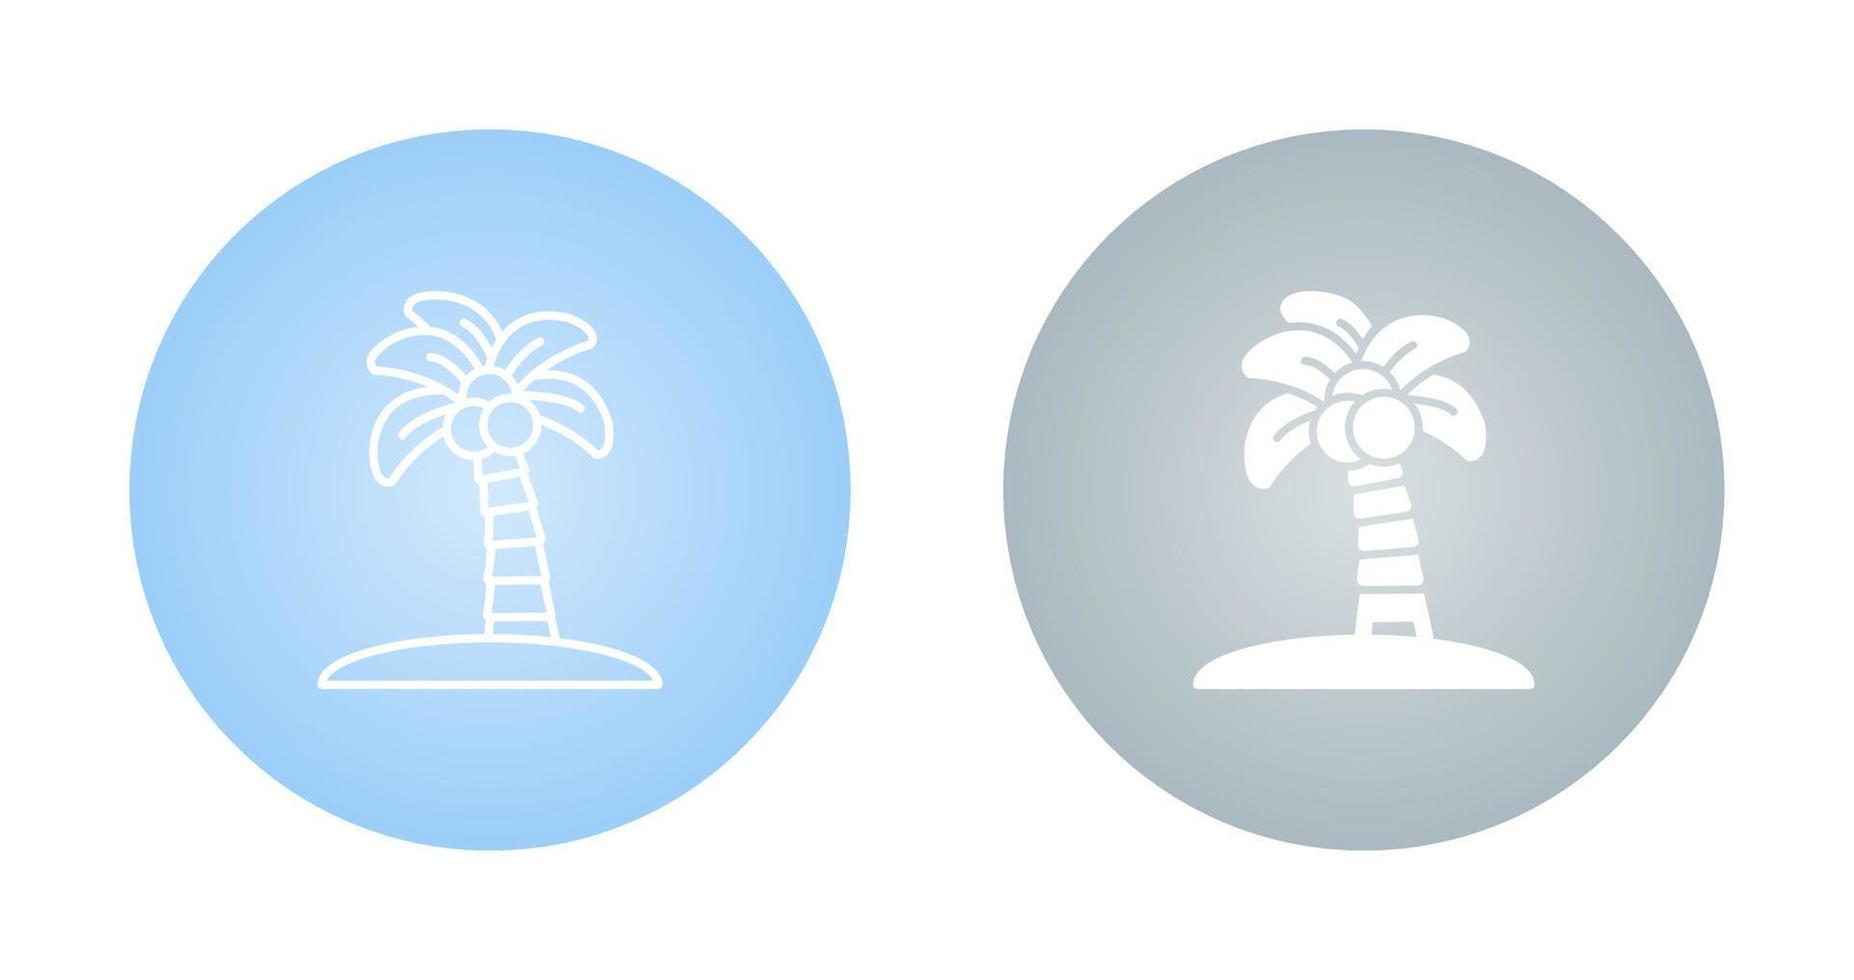 Palm Tree Vector Icon